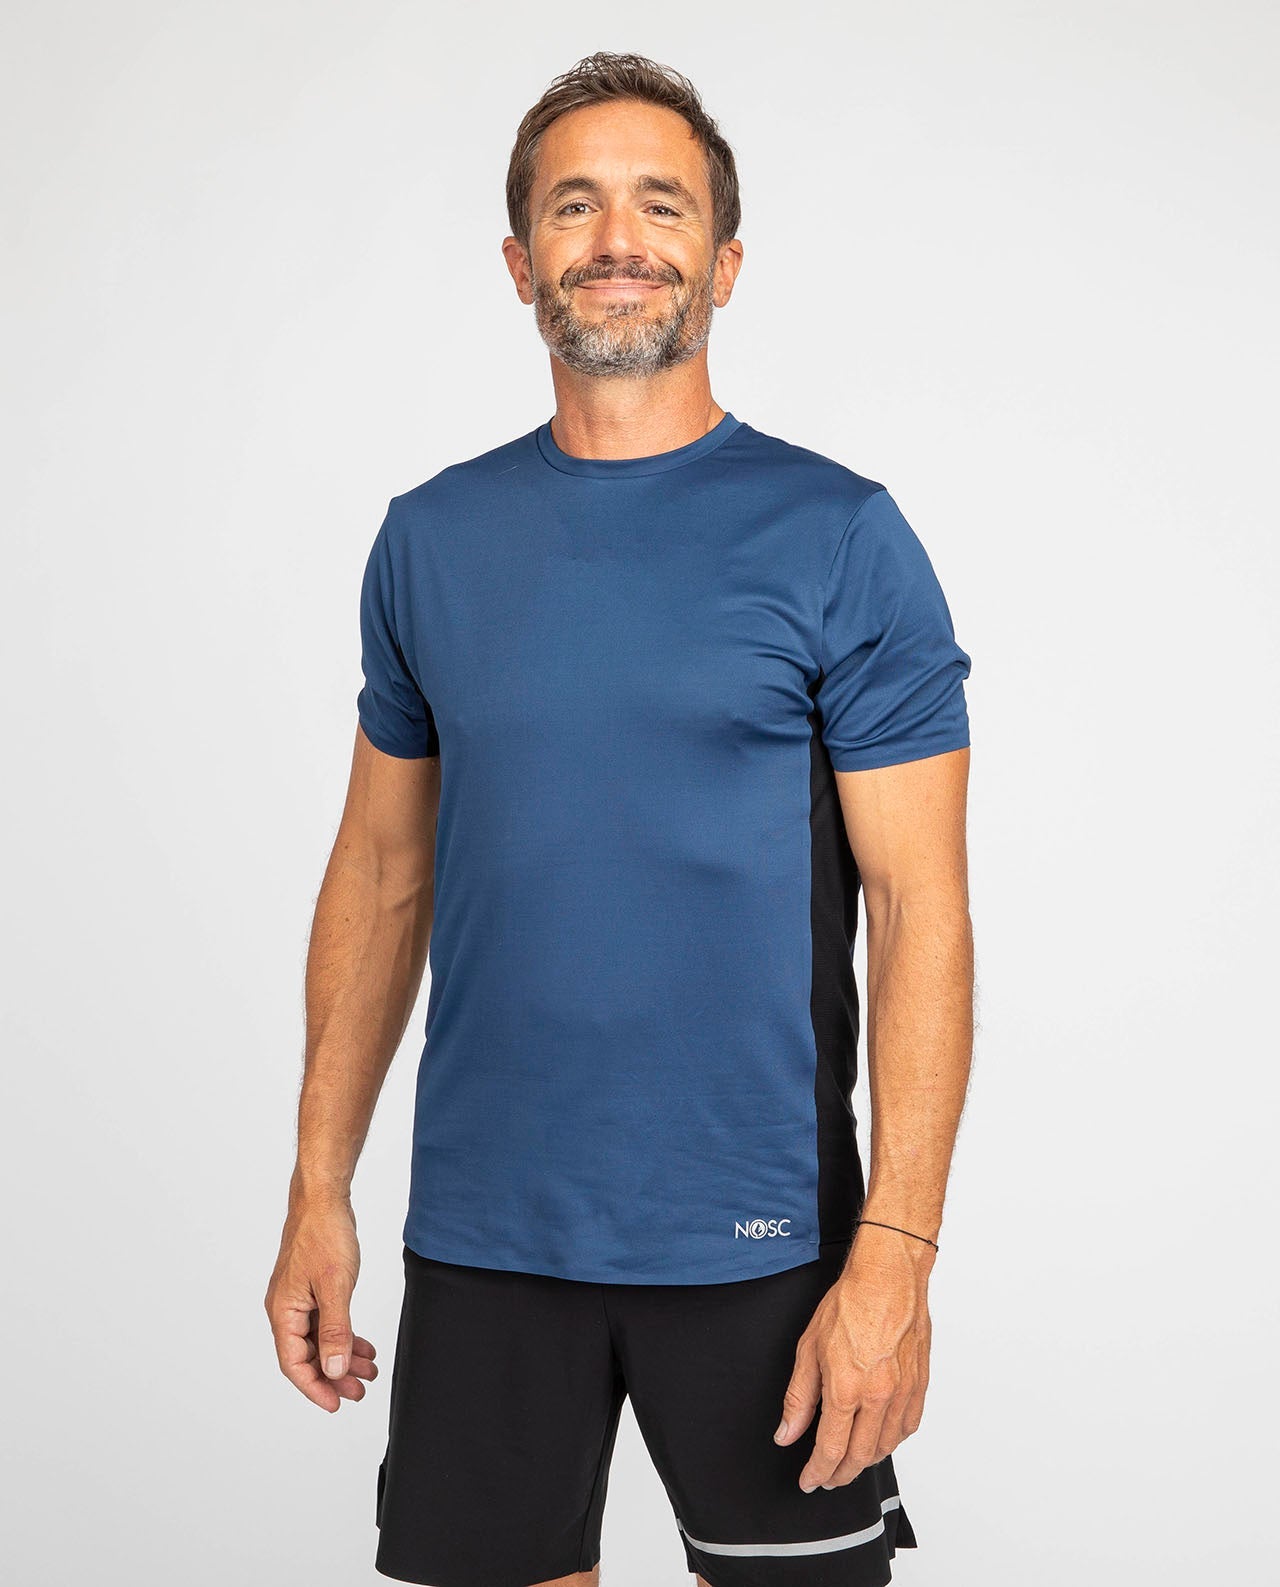 T-Shirt Sport Homme Éco-Responsable Respirant Recyclé Bleu Nosc